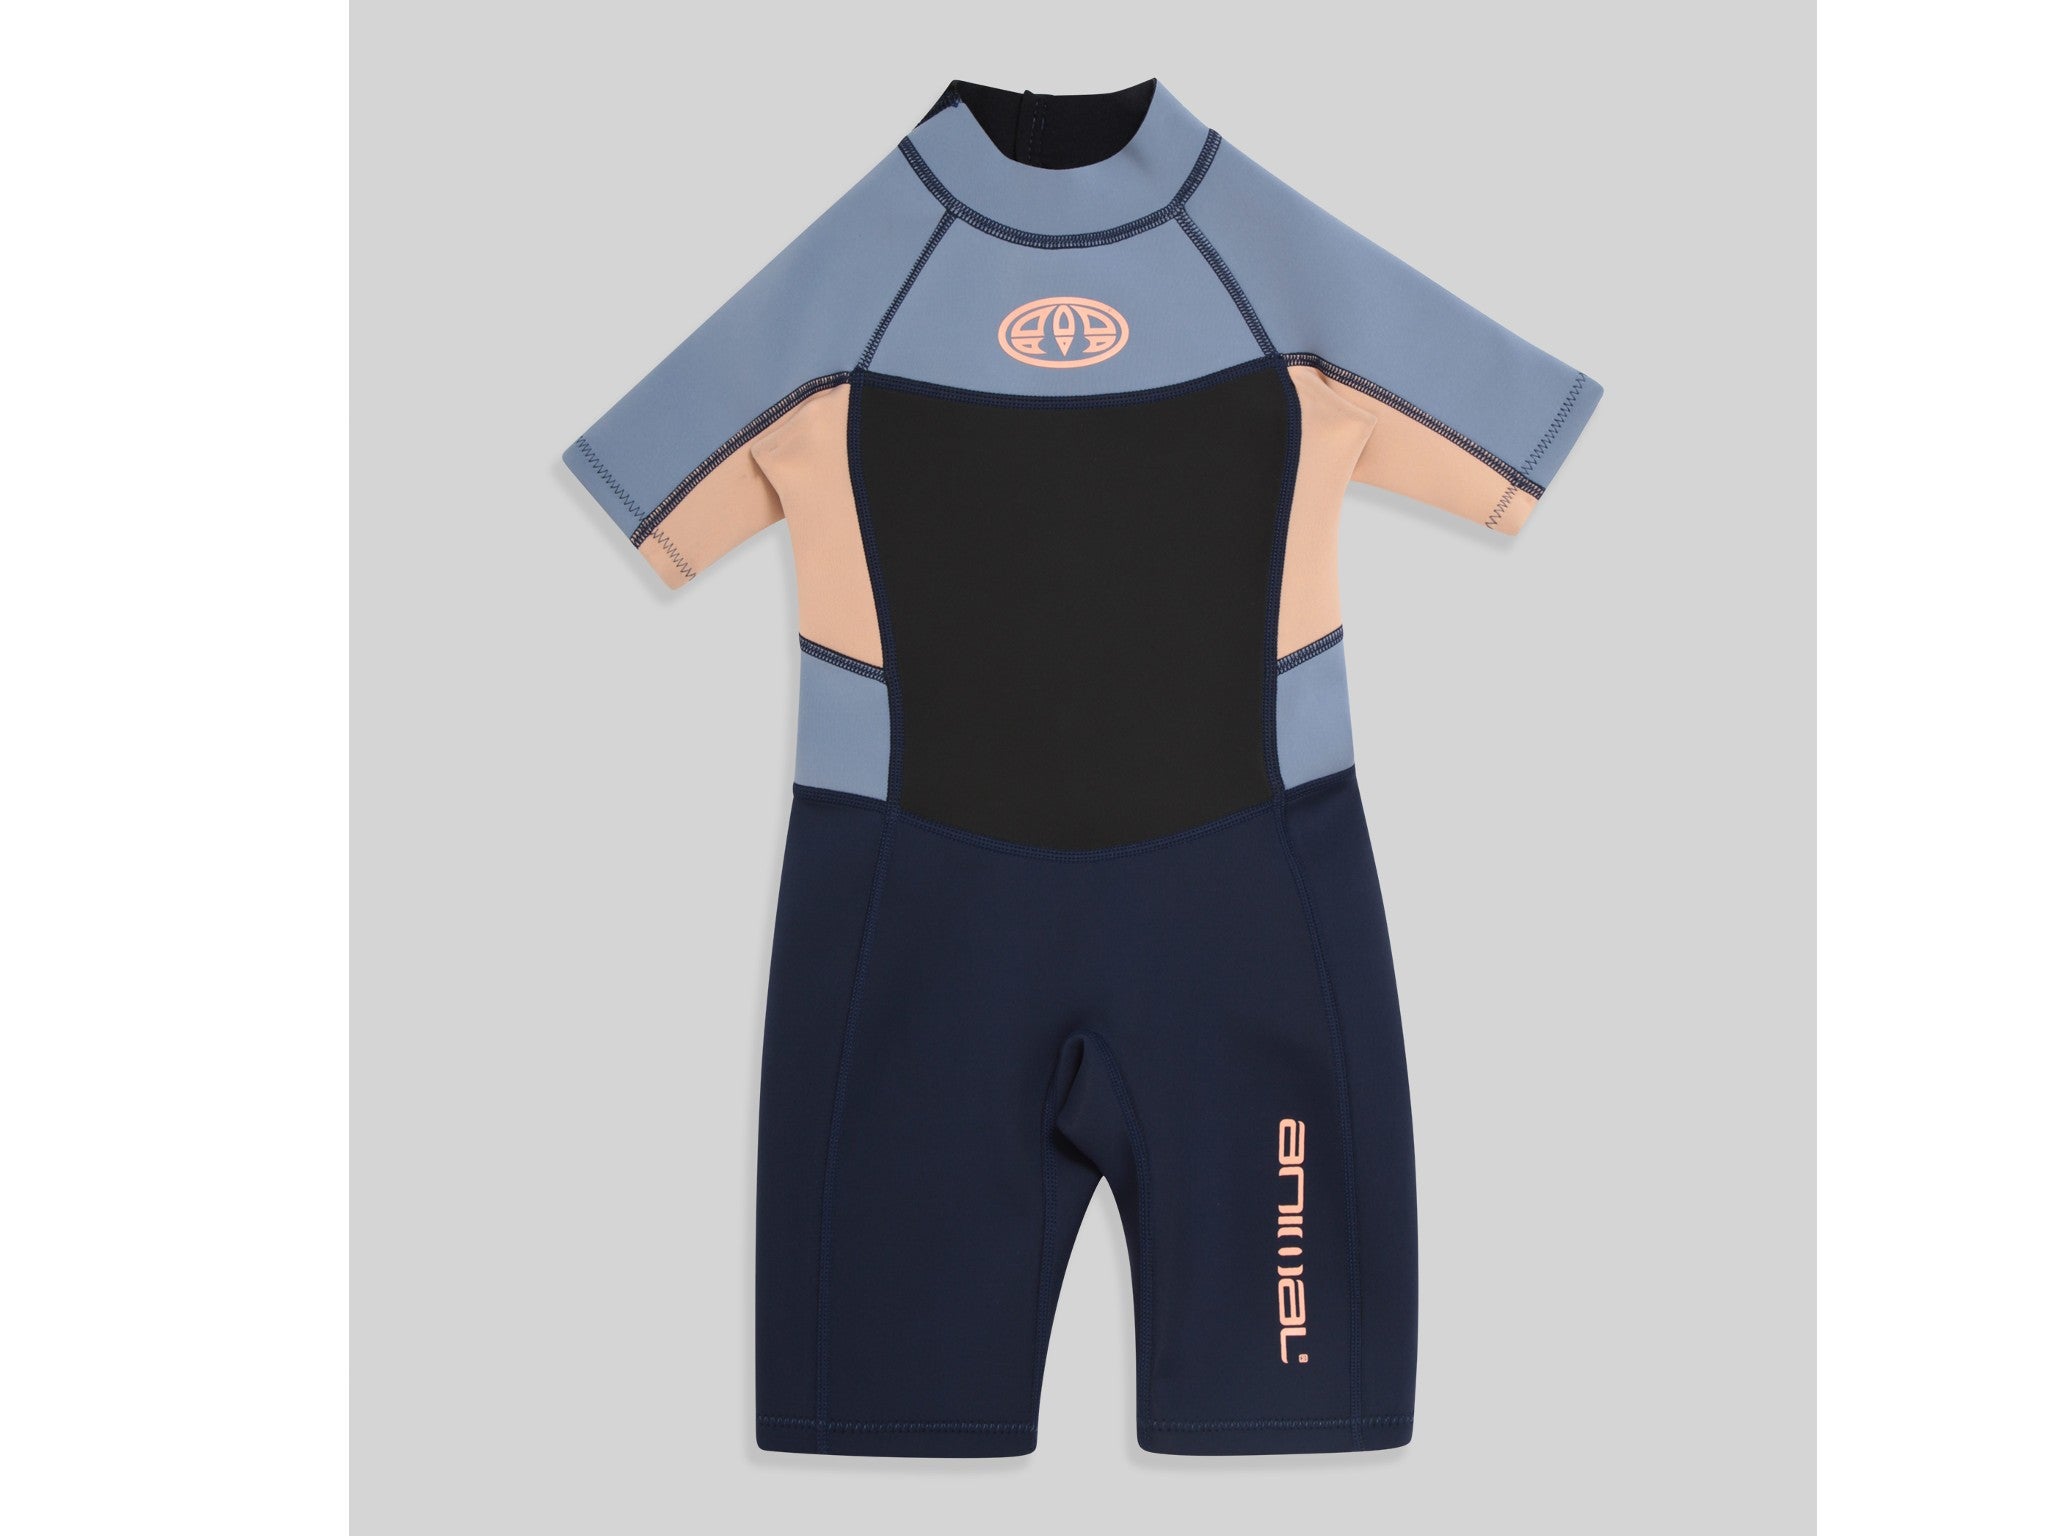 TWF Kids Shorty Wetsuit Short Sleeve Childrens Boys Girls UV Swim Suit Weather Protection Wet Suit 